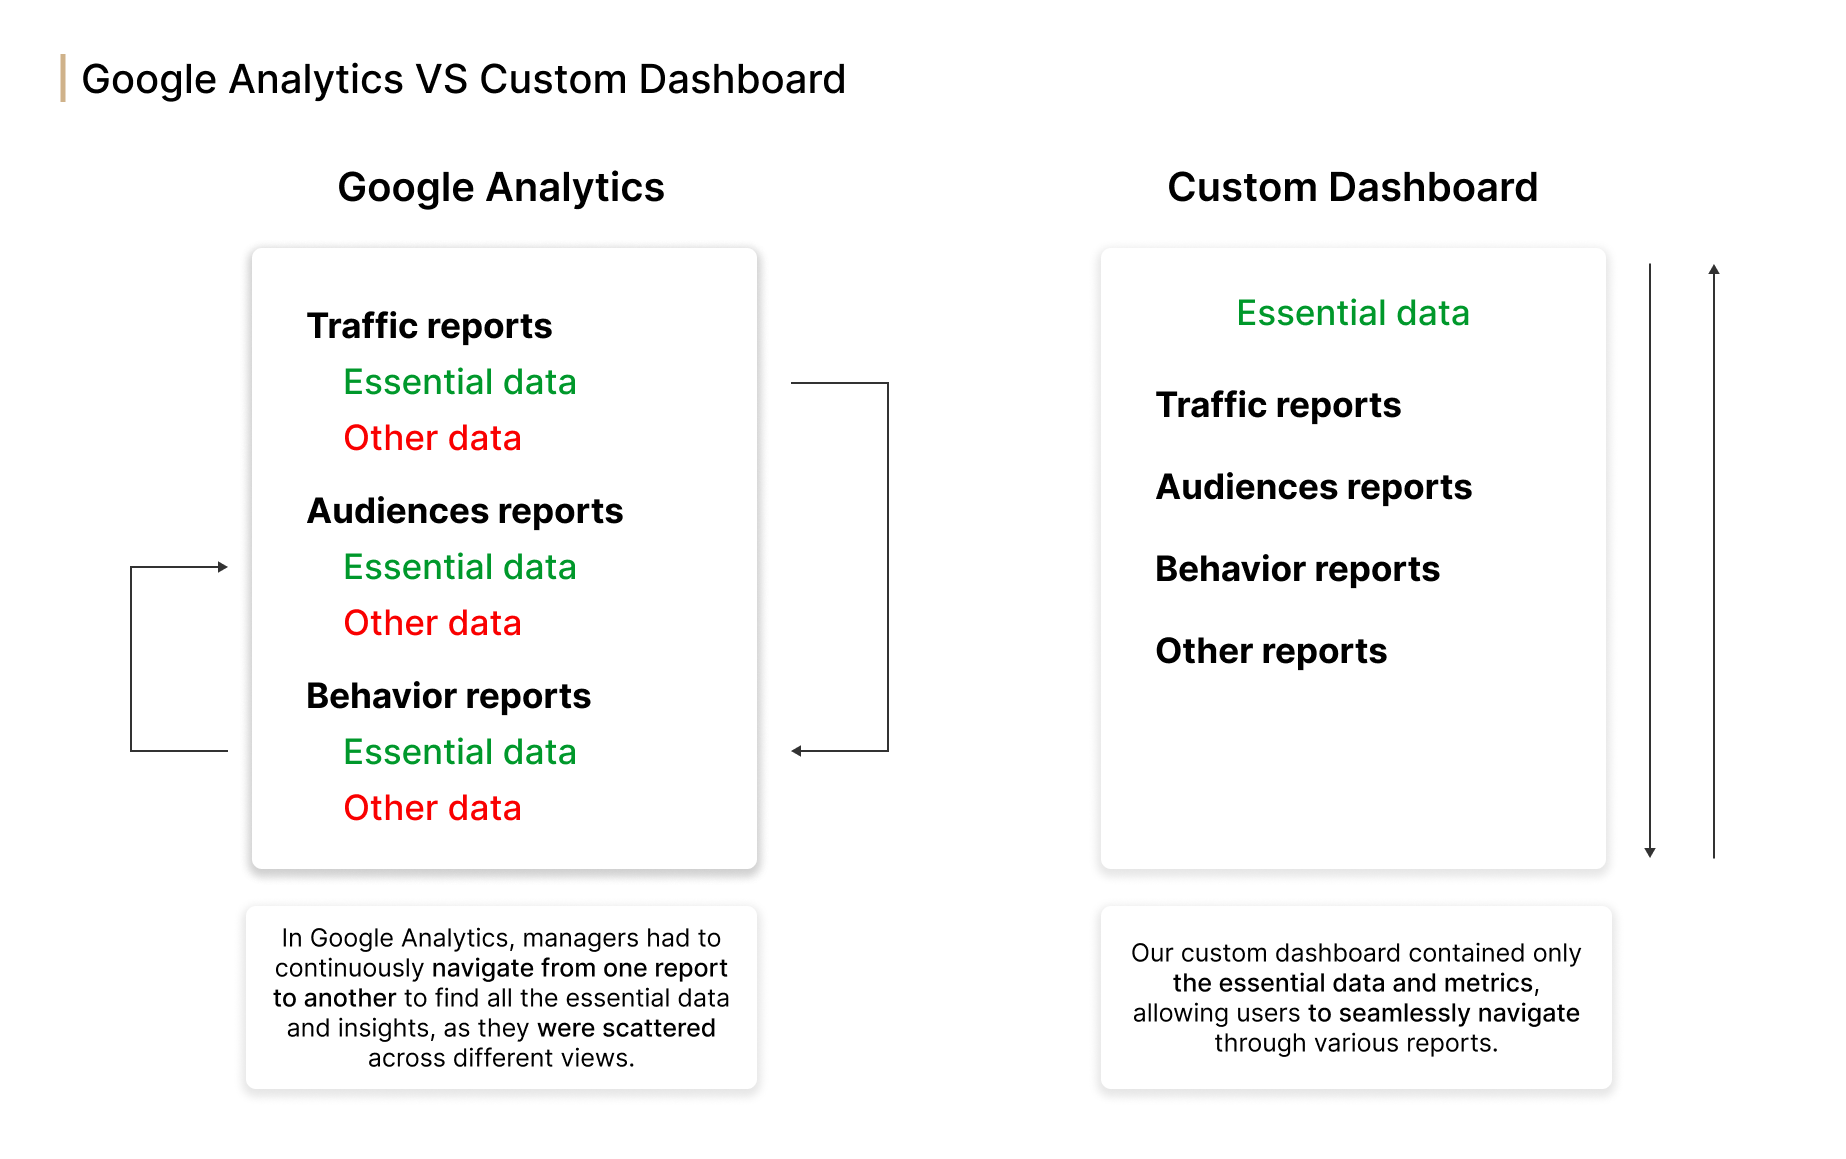 The Daily Meal: Google Analytics VS Custom Dasboard Comparison